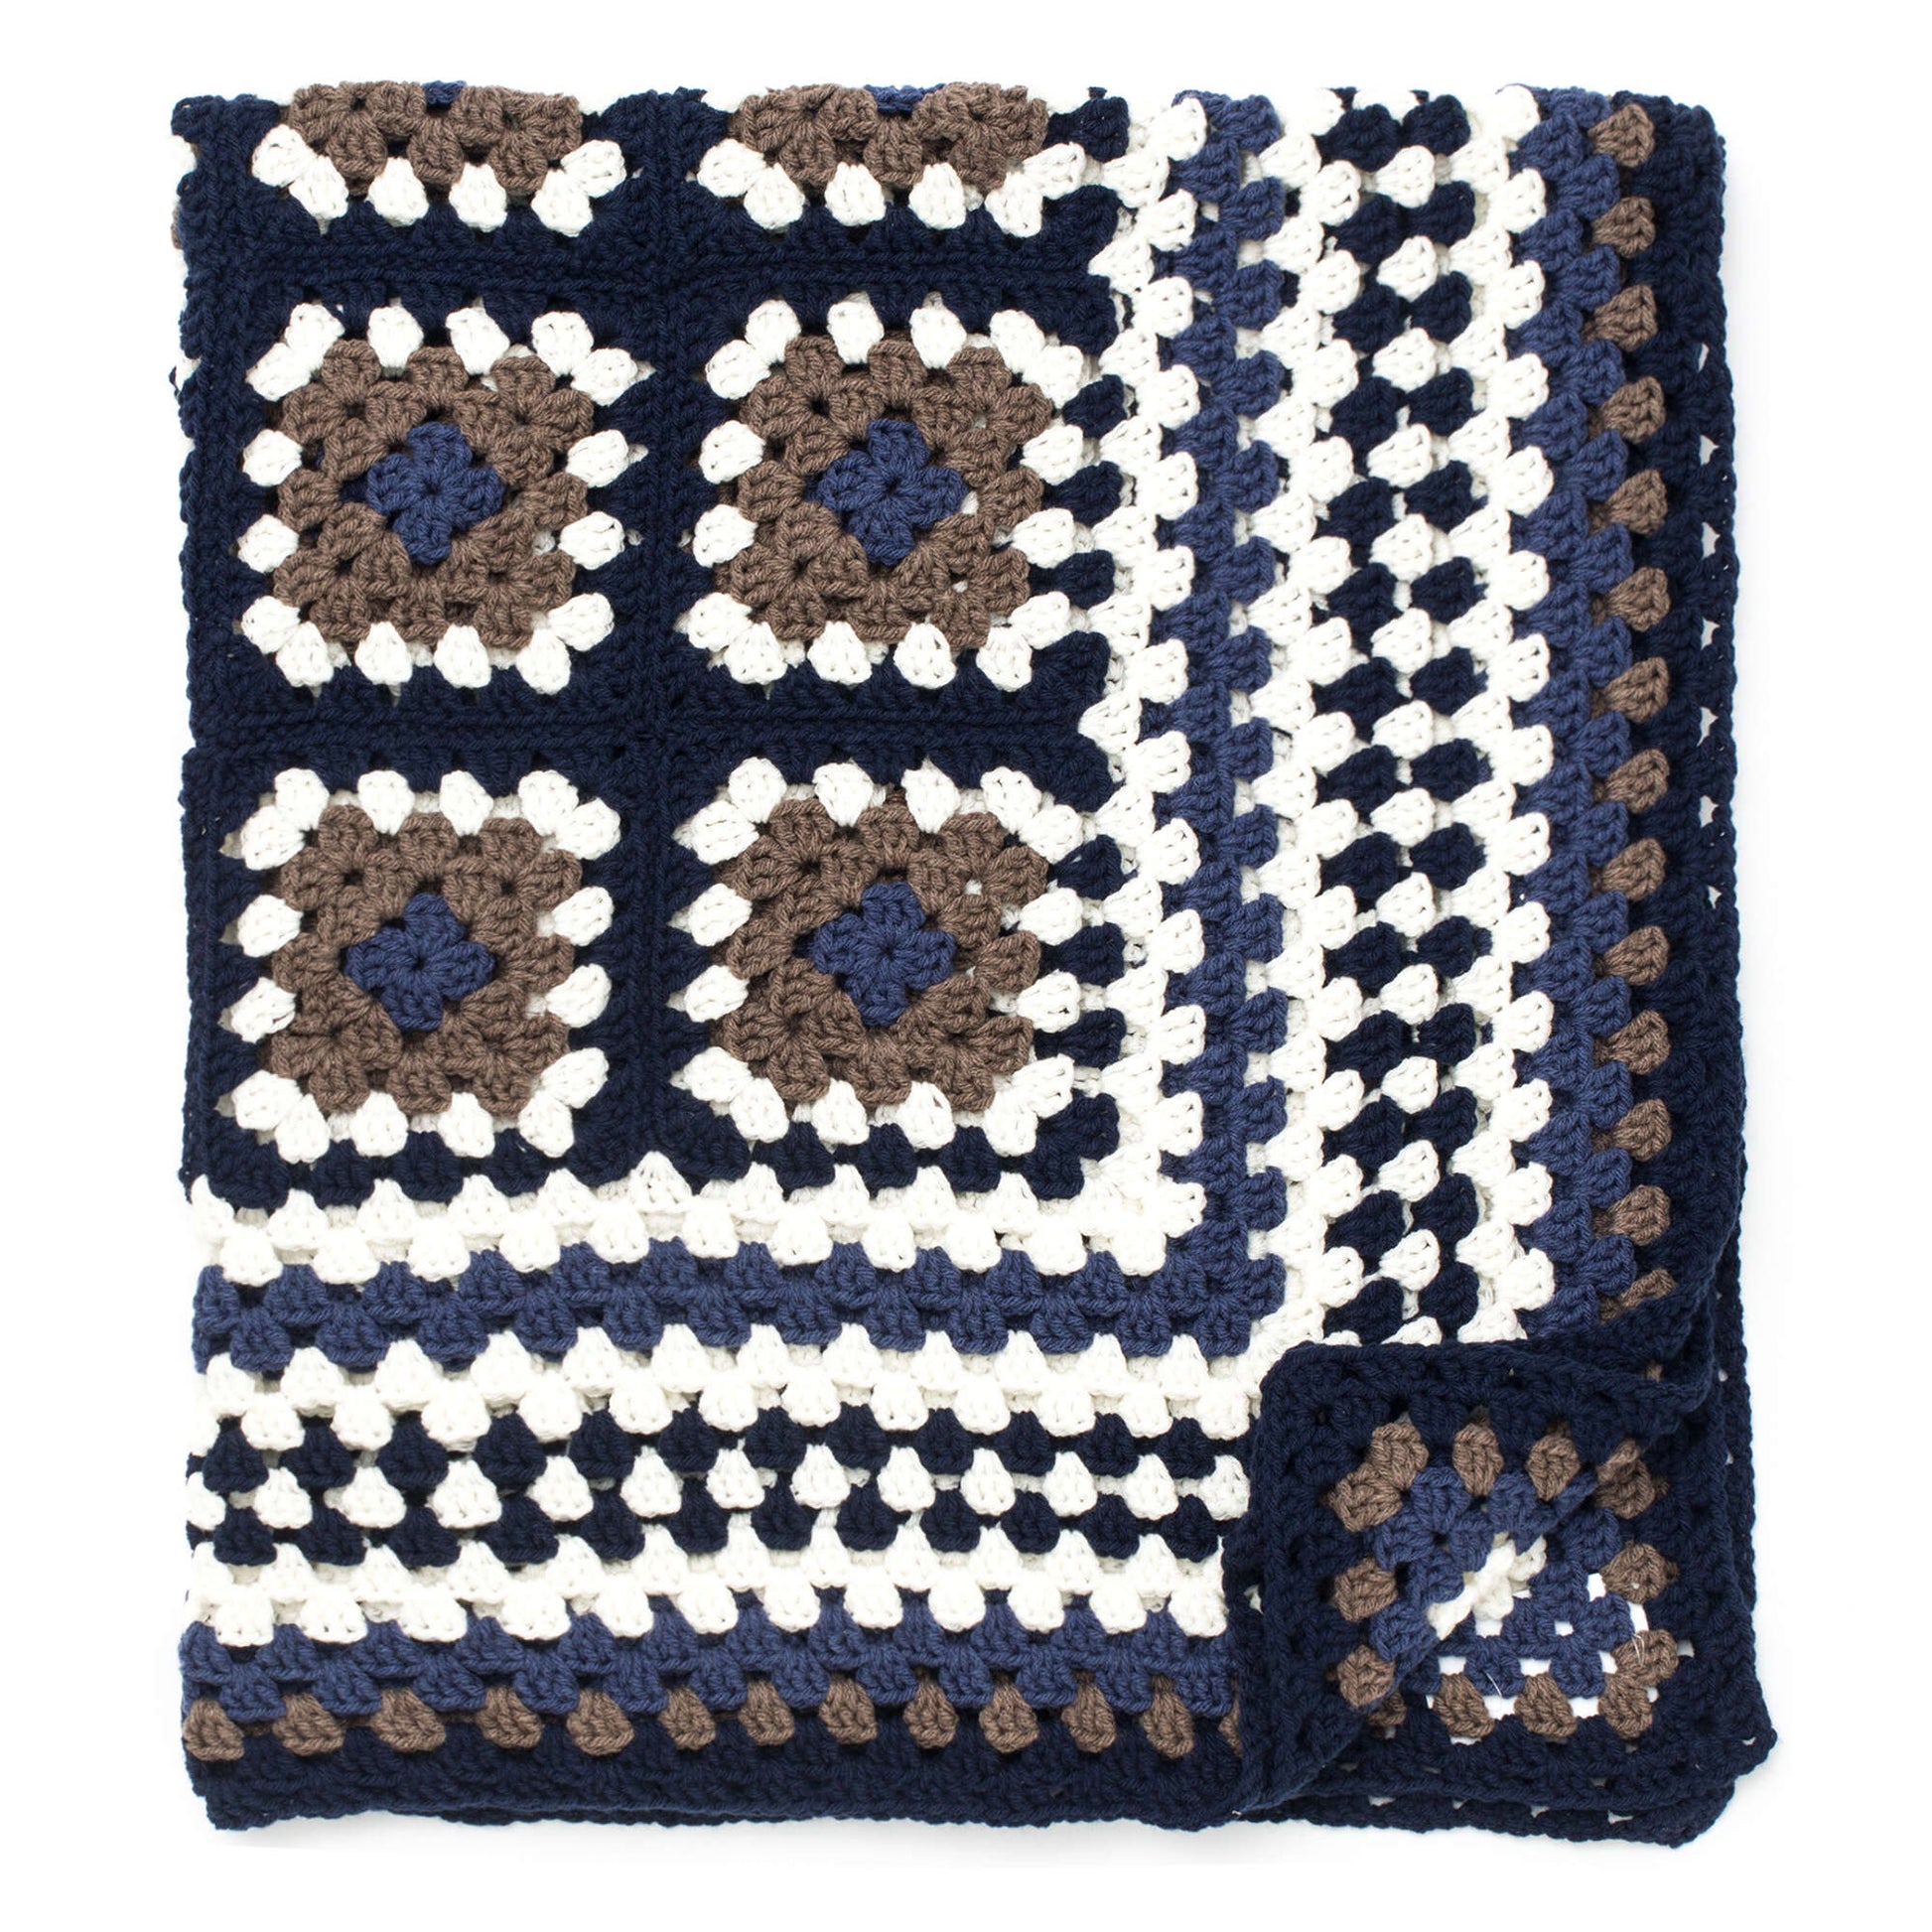 Free Bernat Framed Crochet Granny Throw Pattern